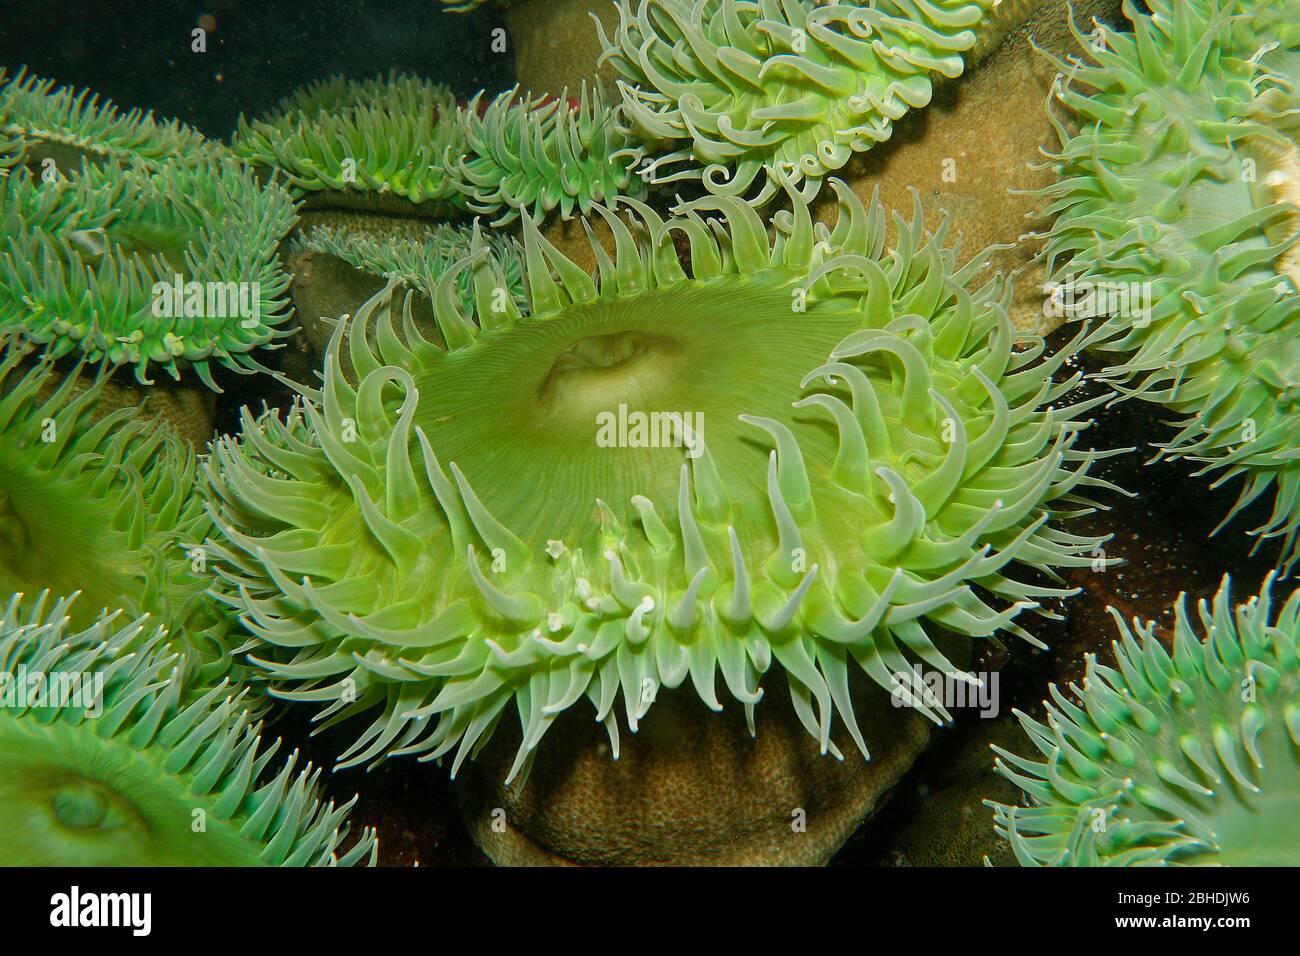 Verde gigante Anemone, Anthopleura xanthogrammica Foto Stock